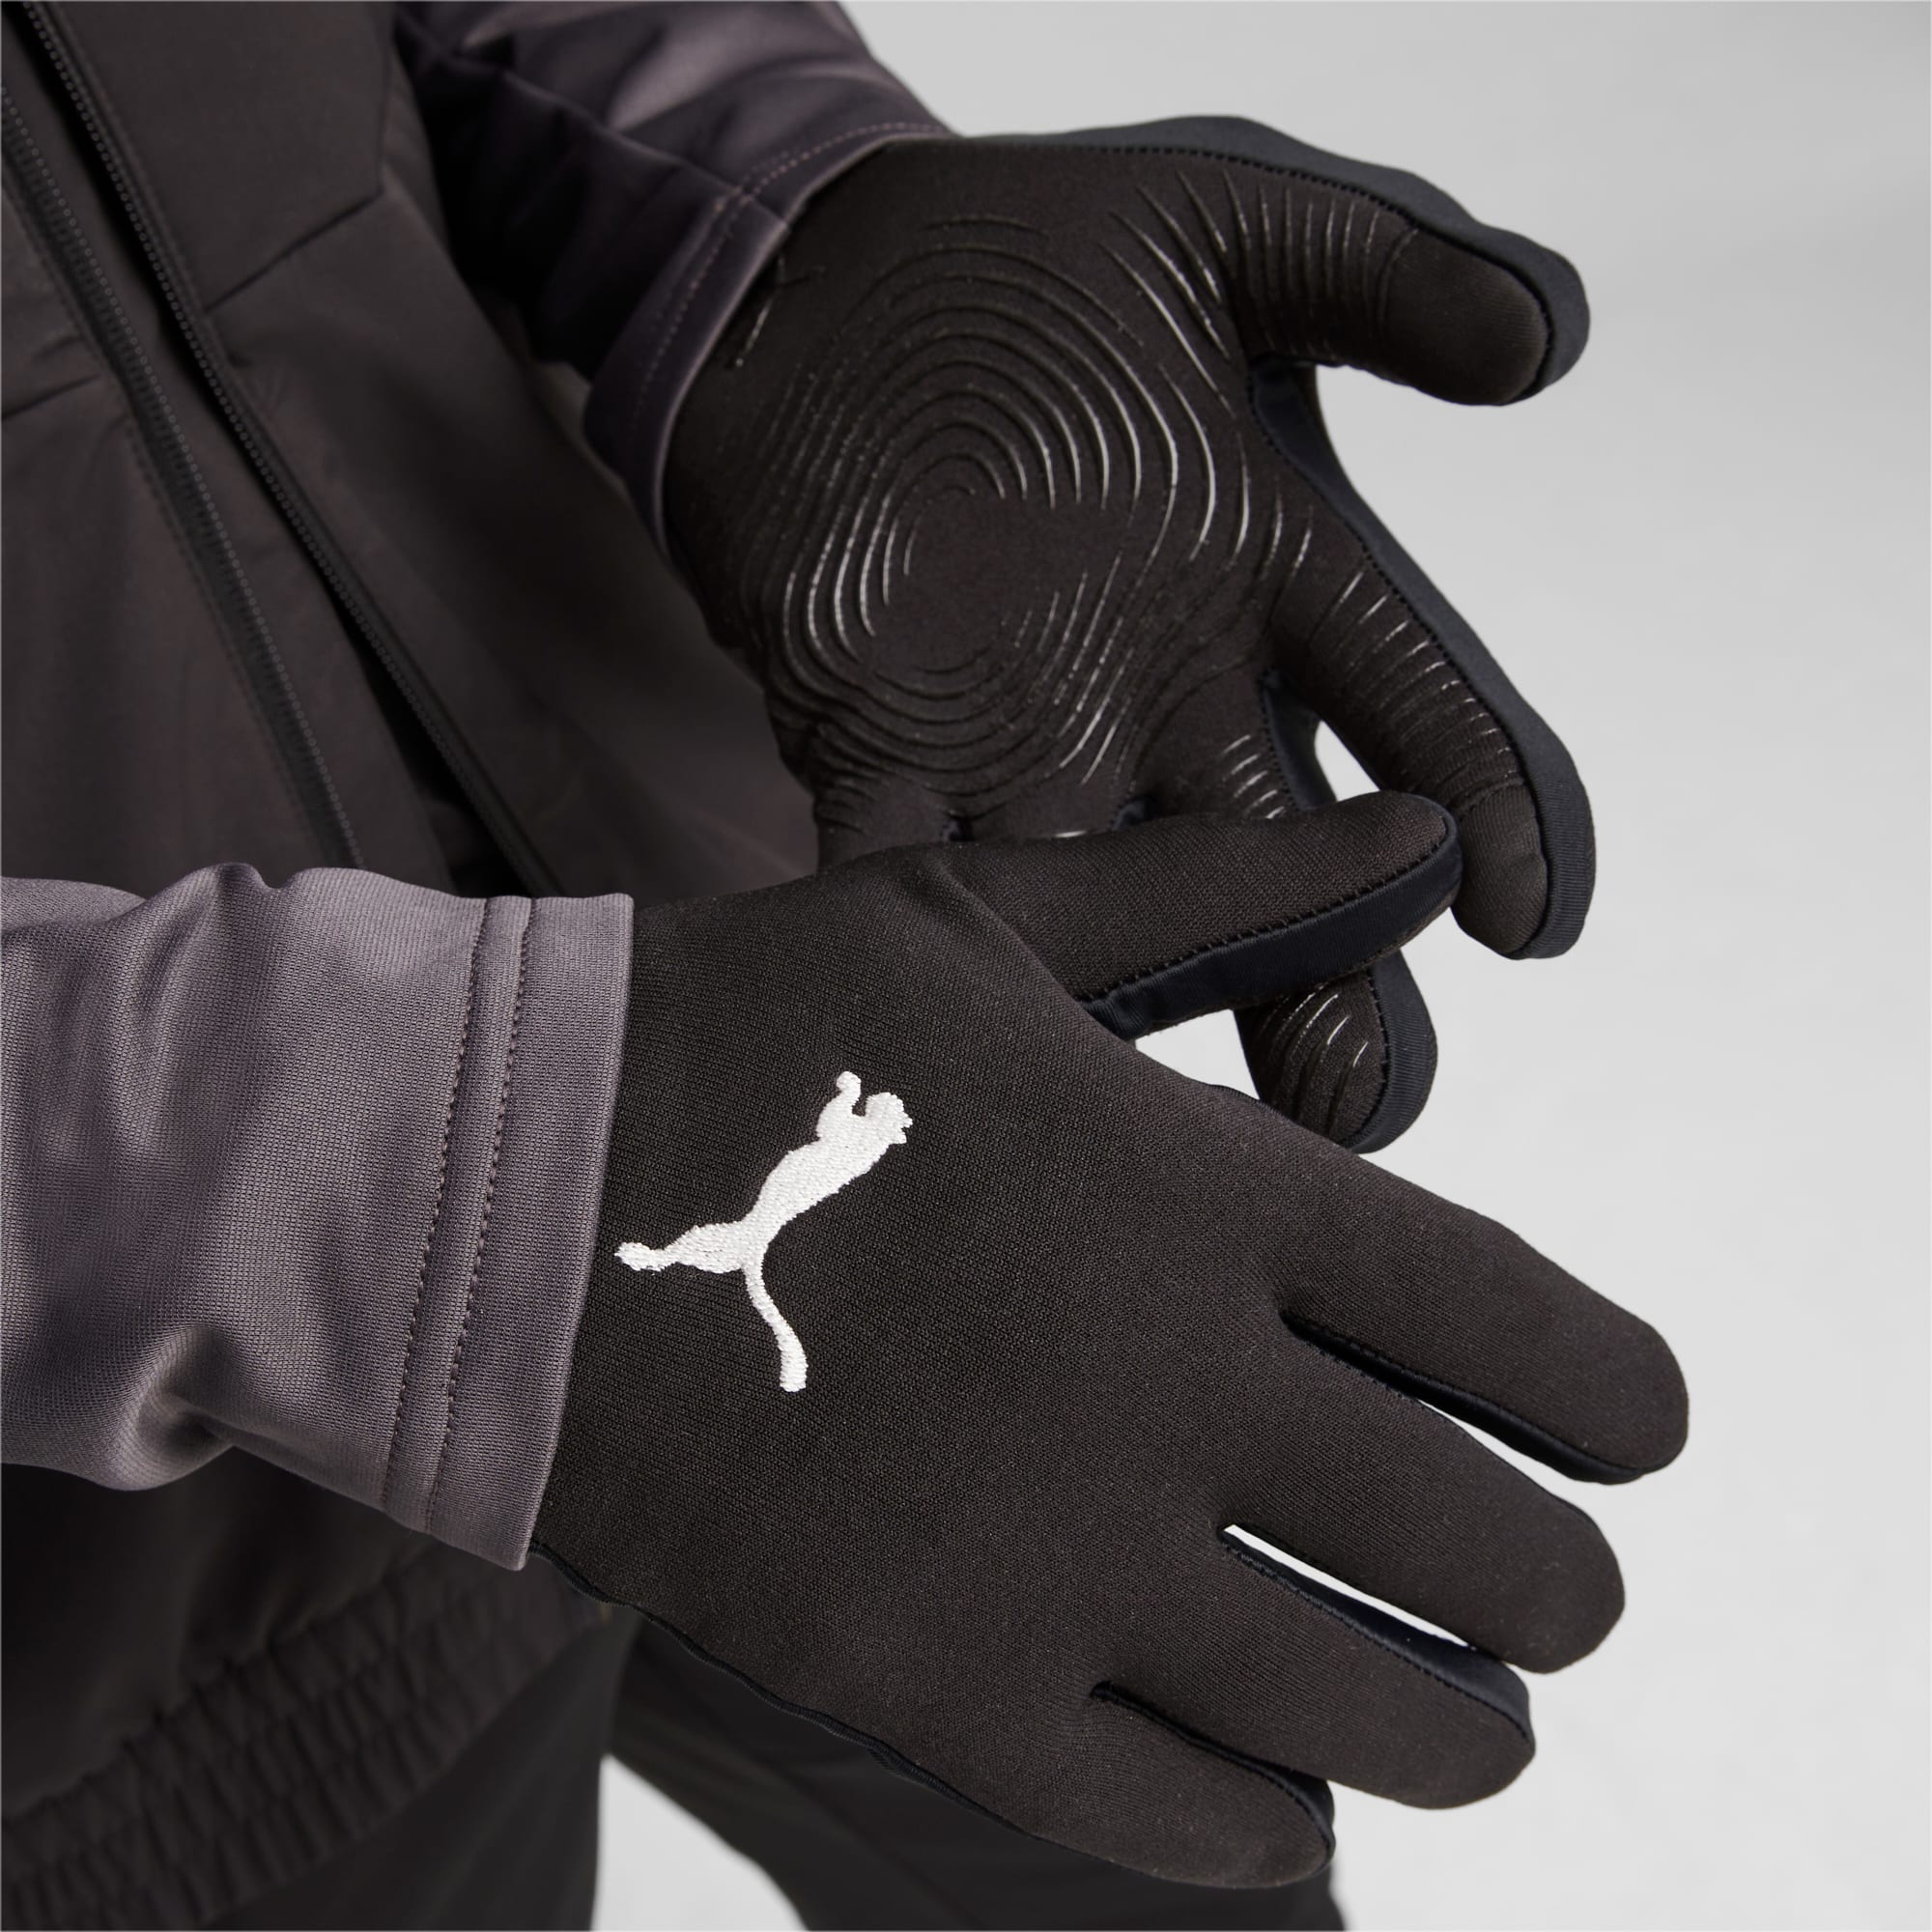 Women's PUMA Individualwinterized Football Gloves, Black/White, Size M, Accessories